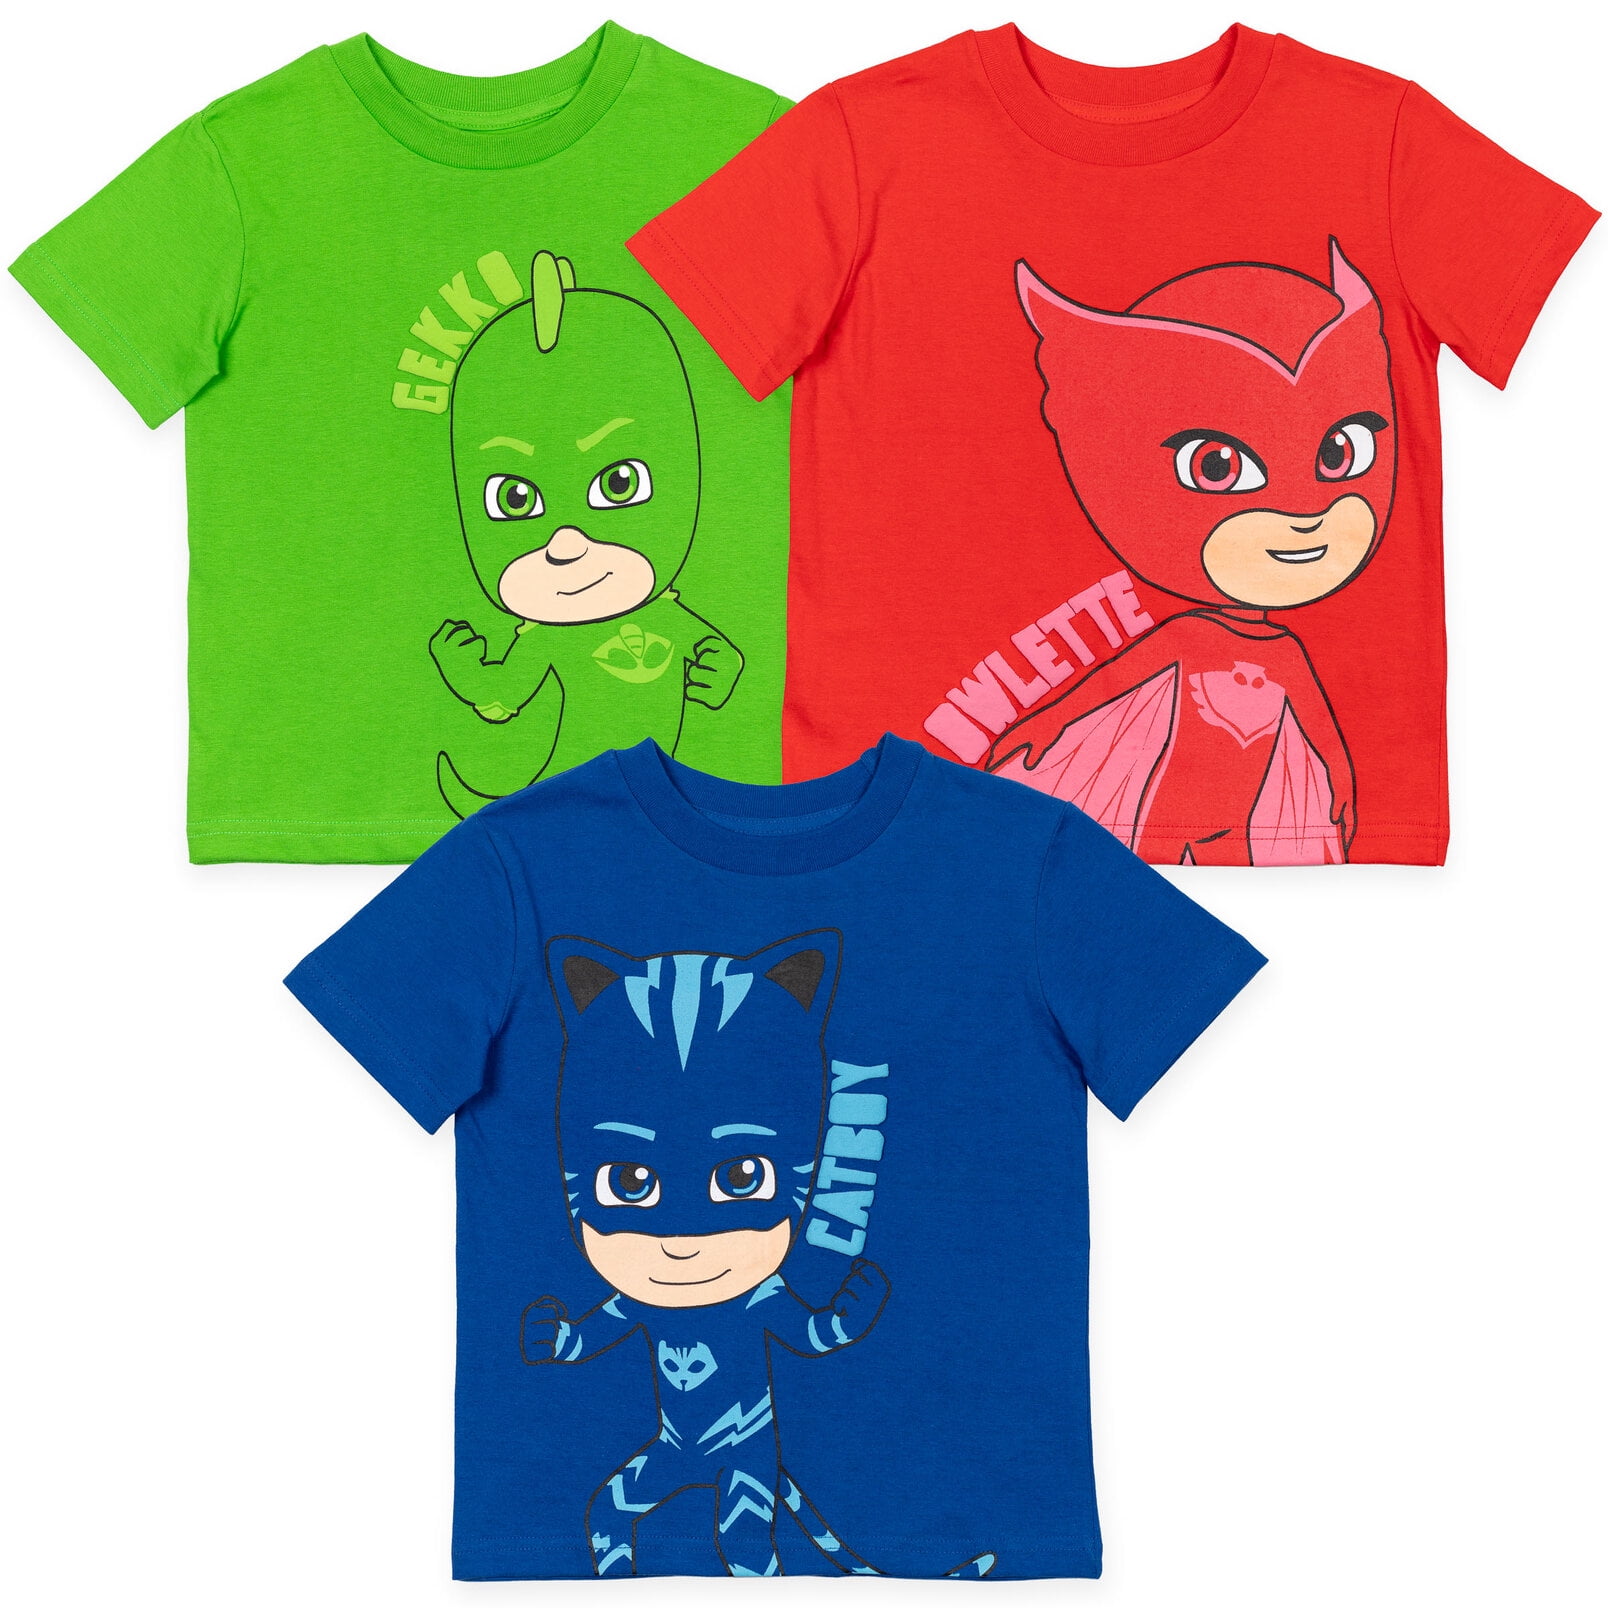 Medal Up Laws and regulations PJ Masks Gekko Catboy Owlette Toddler Boys 3 Pack Graphic T-Shirts  Blue/Green/Red 2T - Walmart.com